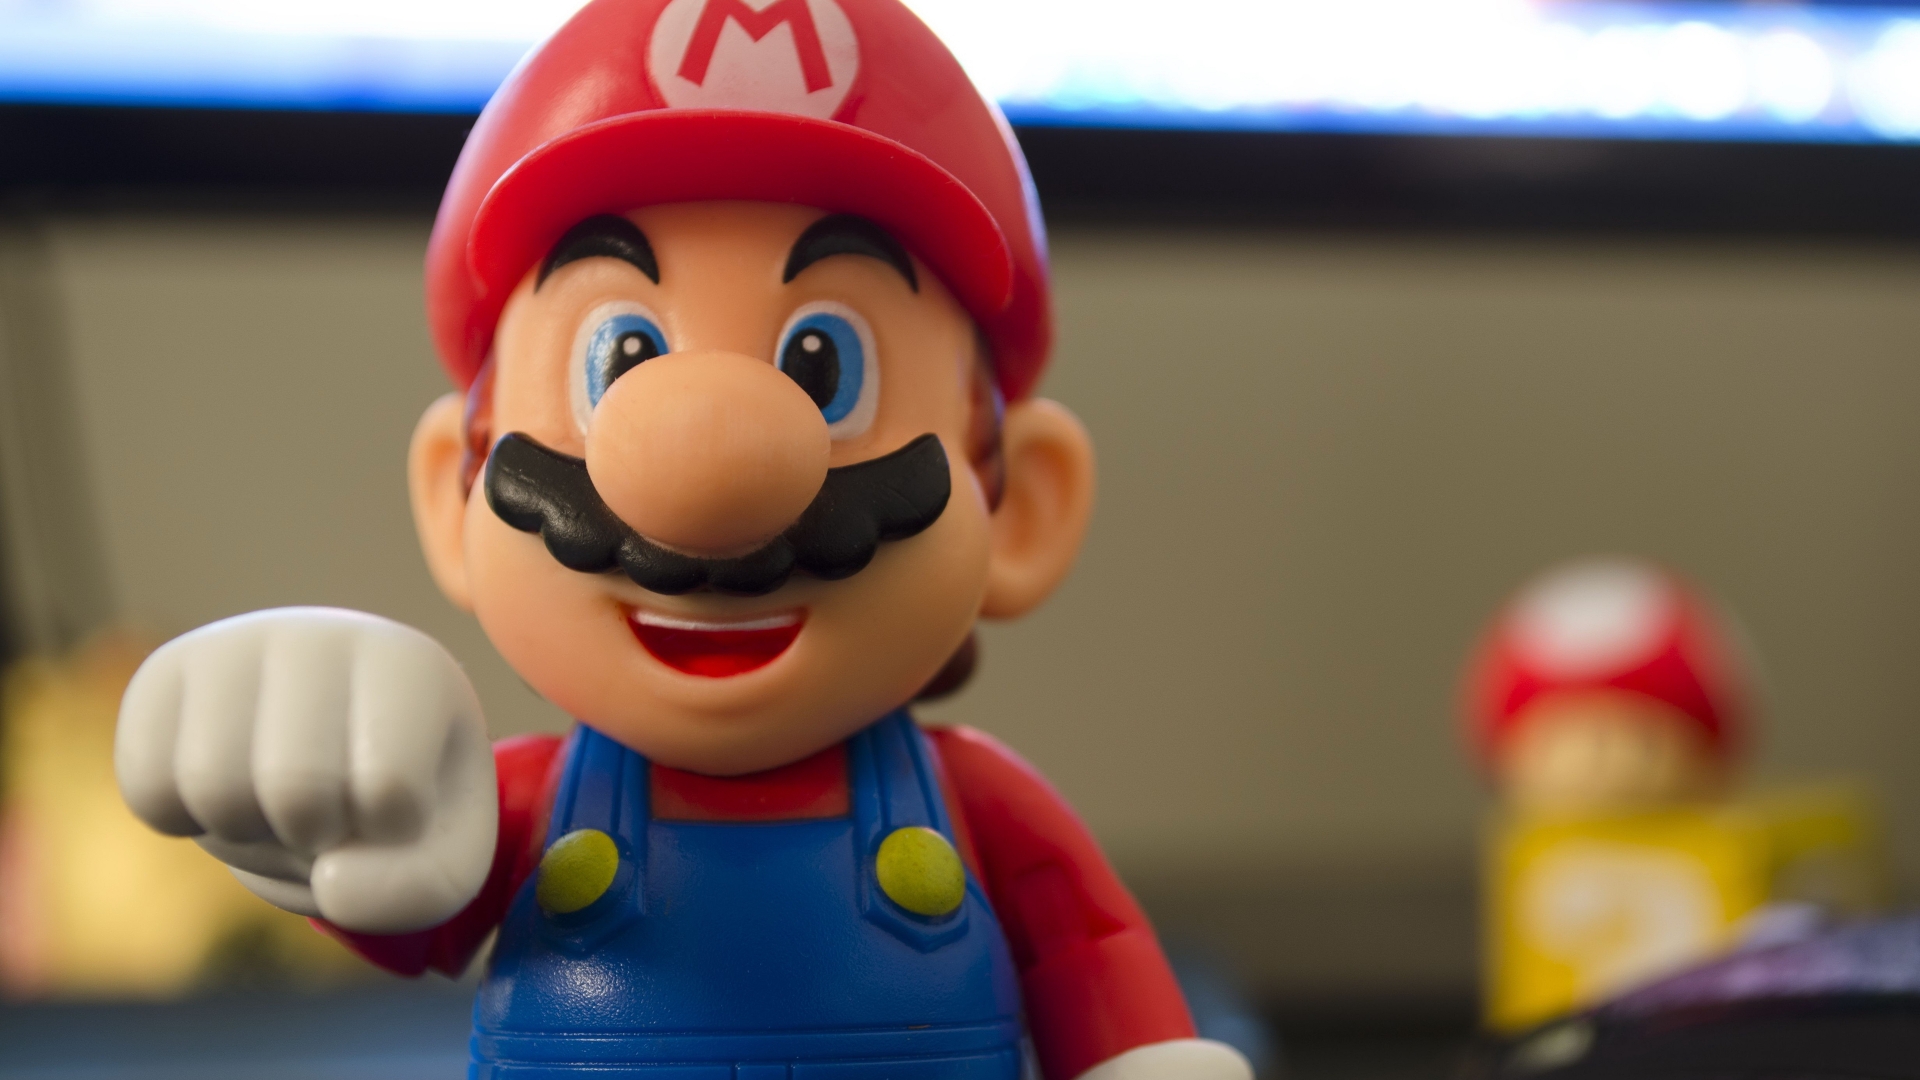 Super Mario Figurine for 1920 x 1080 HDTV 1080p resolution